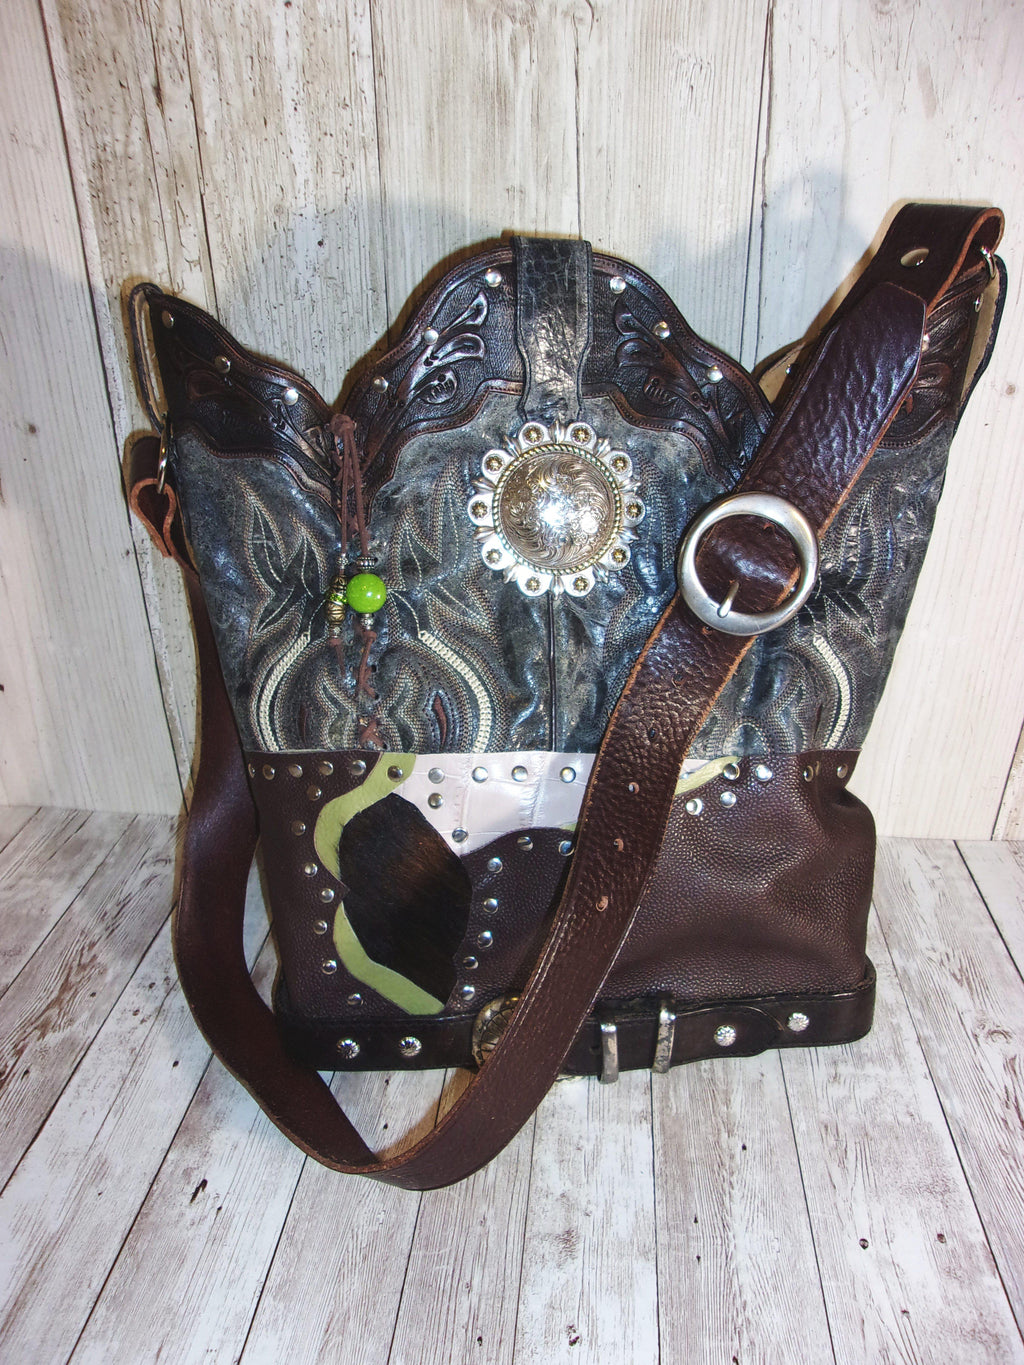 Handmade Leather Purse - Cowboy Boot Purse - Western Leather Purse TS255 cowboy boot purses, western fringe purse, handmade leather purses, boot purse, handmade western purse, custom leather handbags Chris Thompson Bags